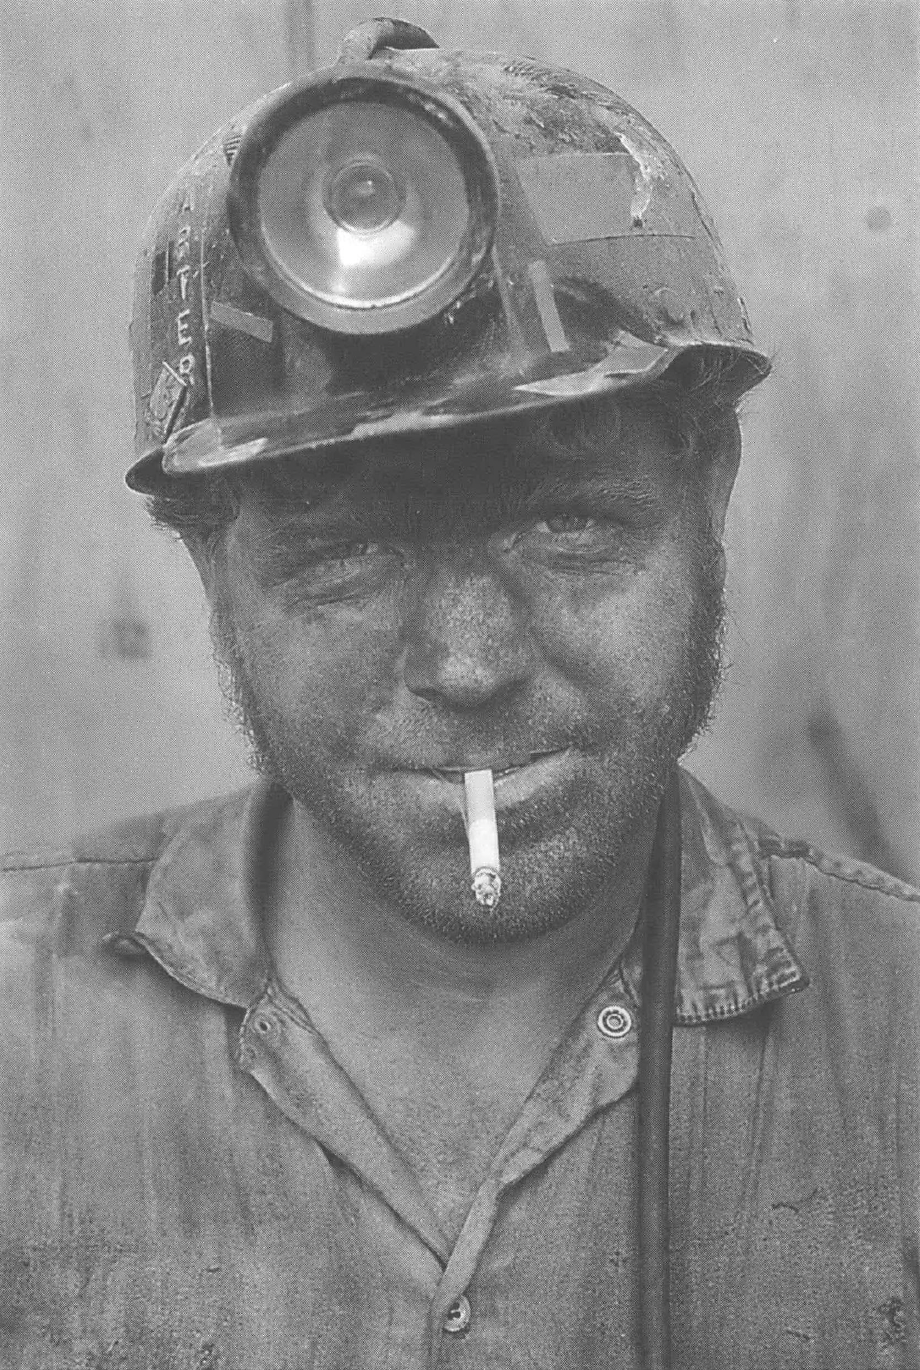 Coal miner in hard hat smoking cigarette